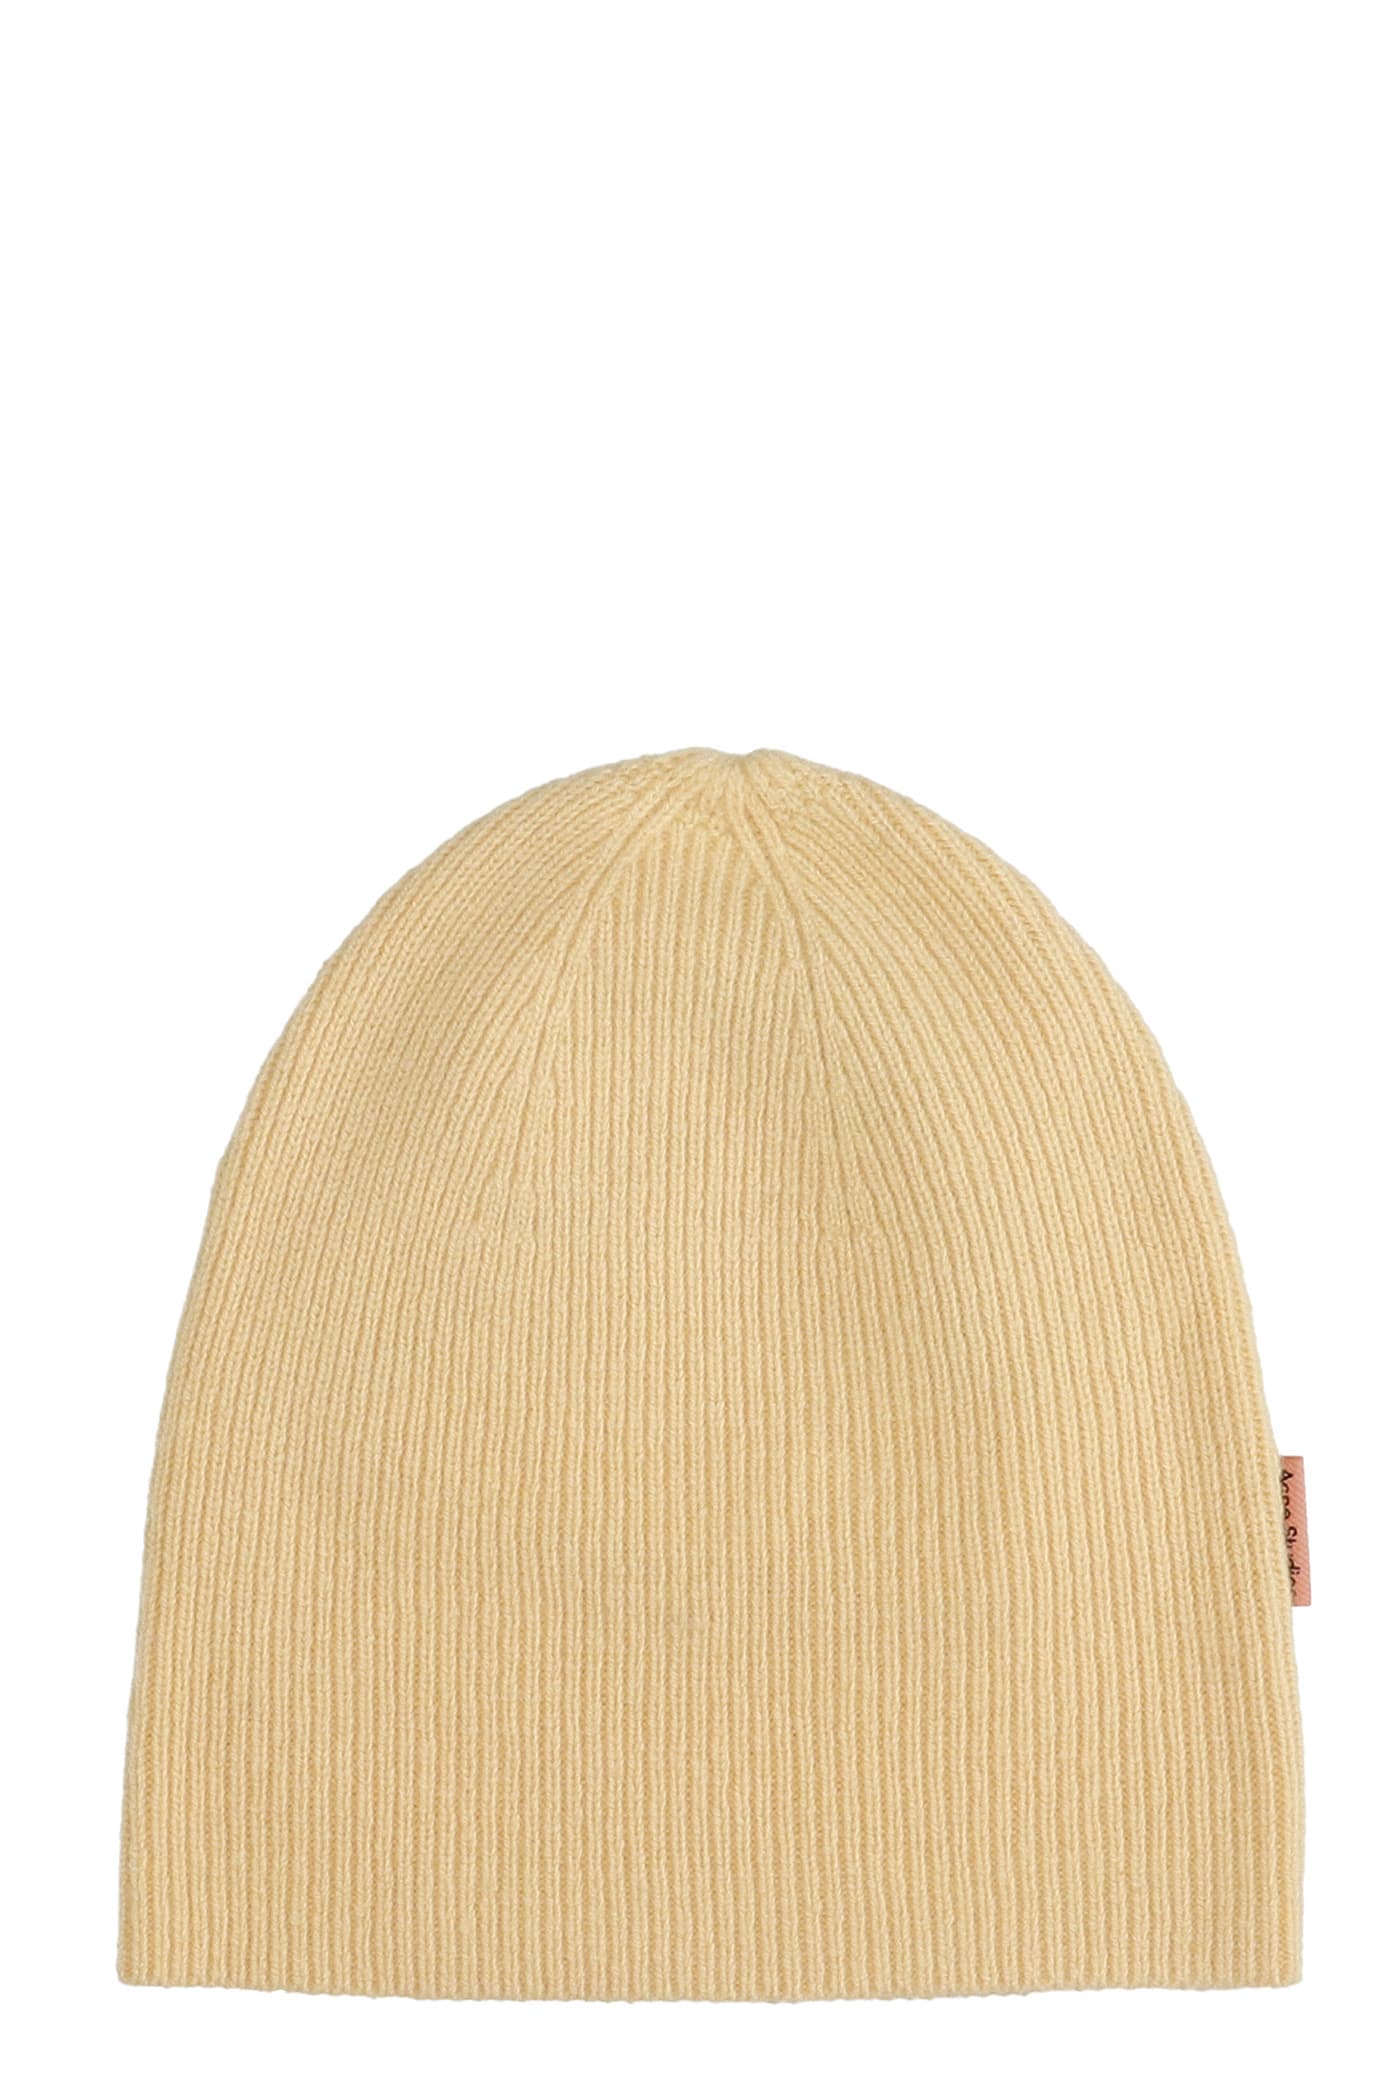 Acne Studios Hats In Yellow Wool